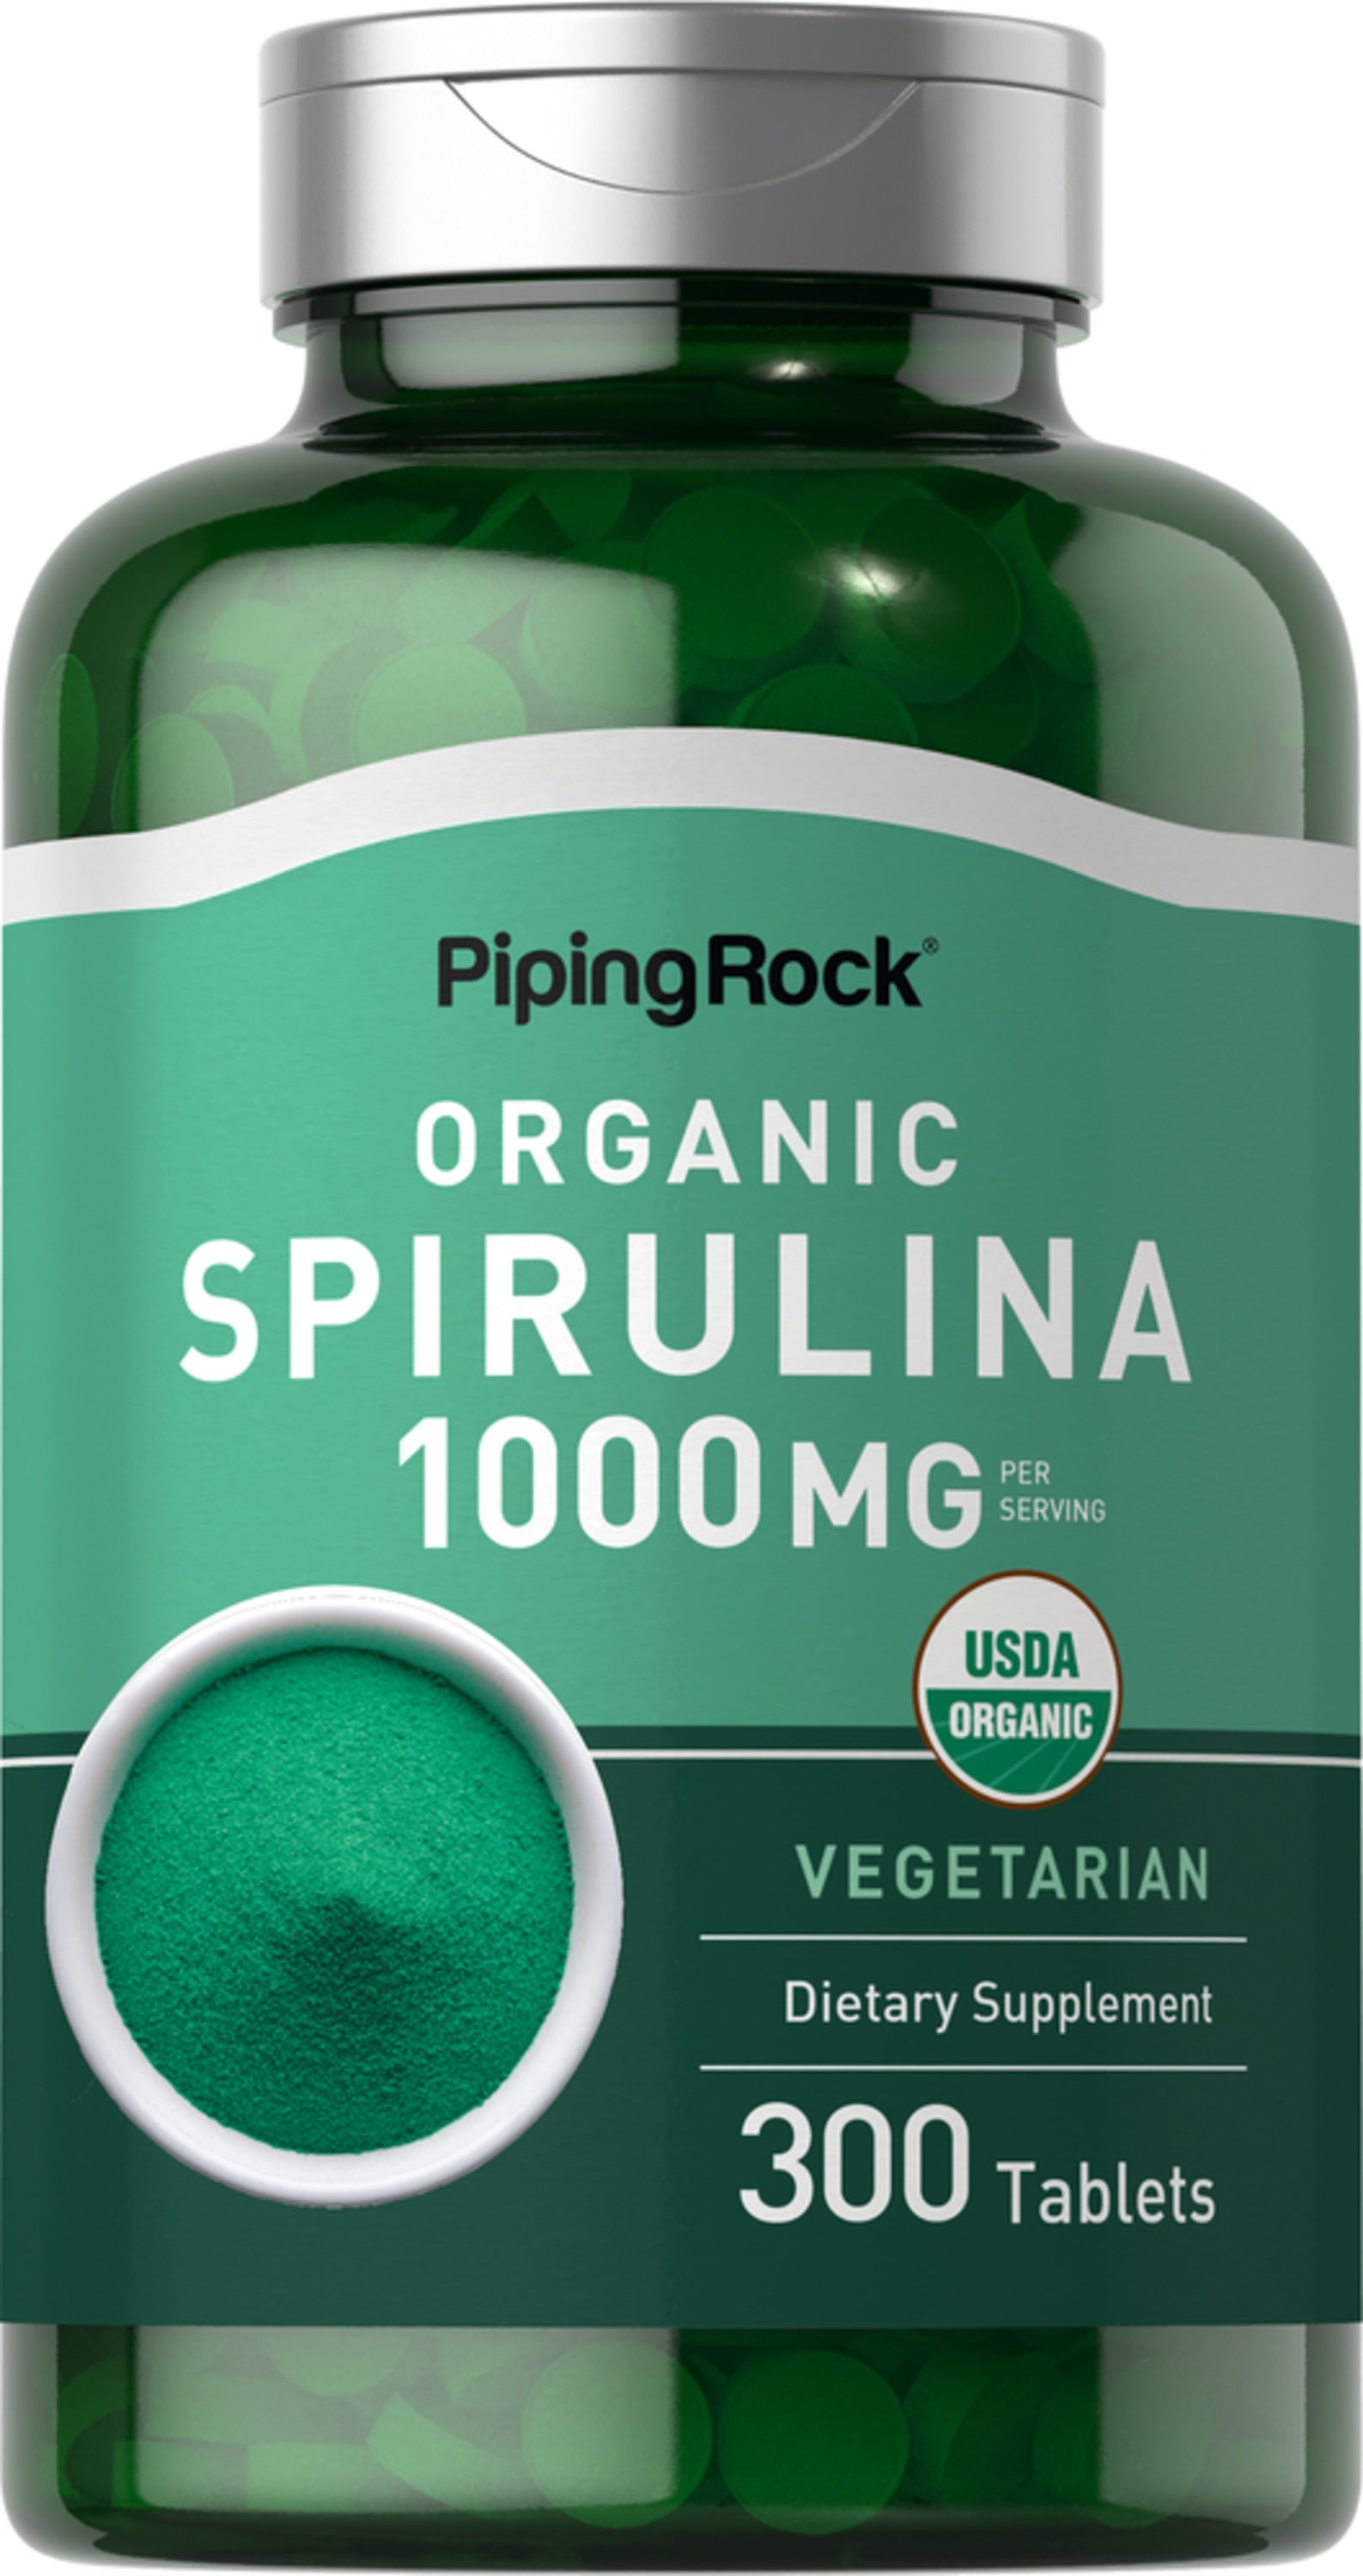 Spirulina (Organic), 1000 mg (per serving), 300 Vegetarian Tablets